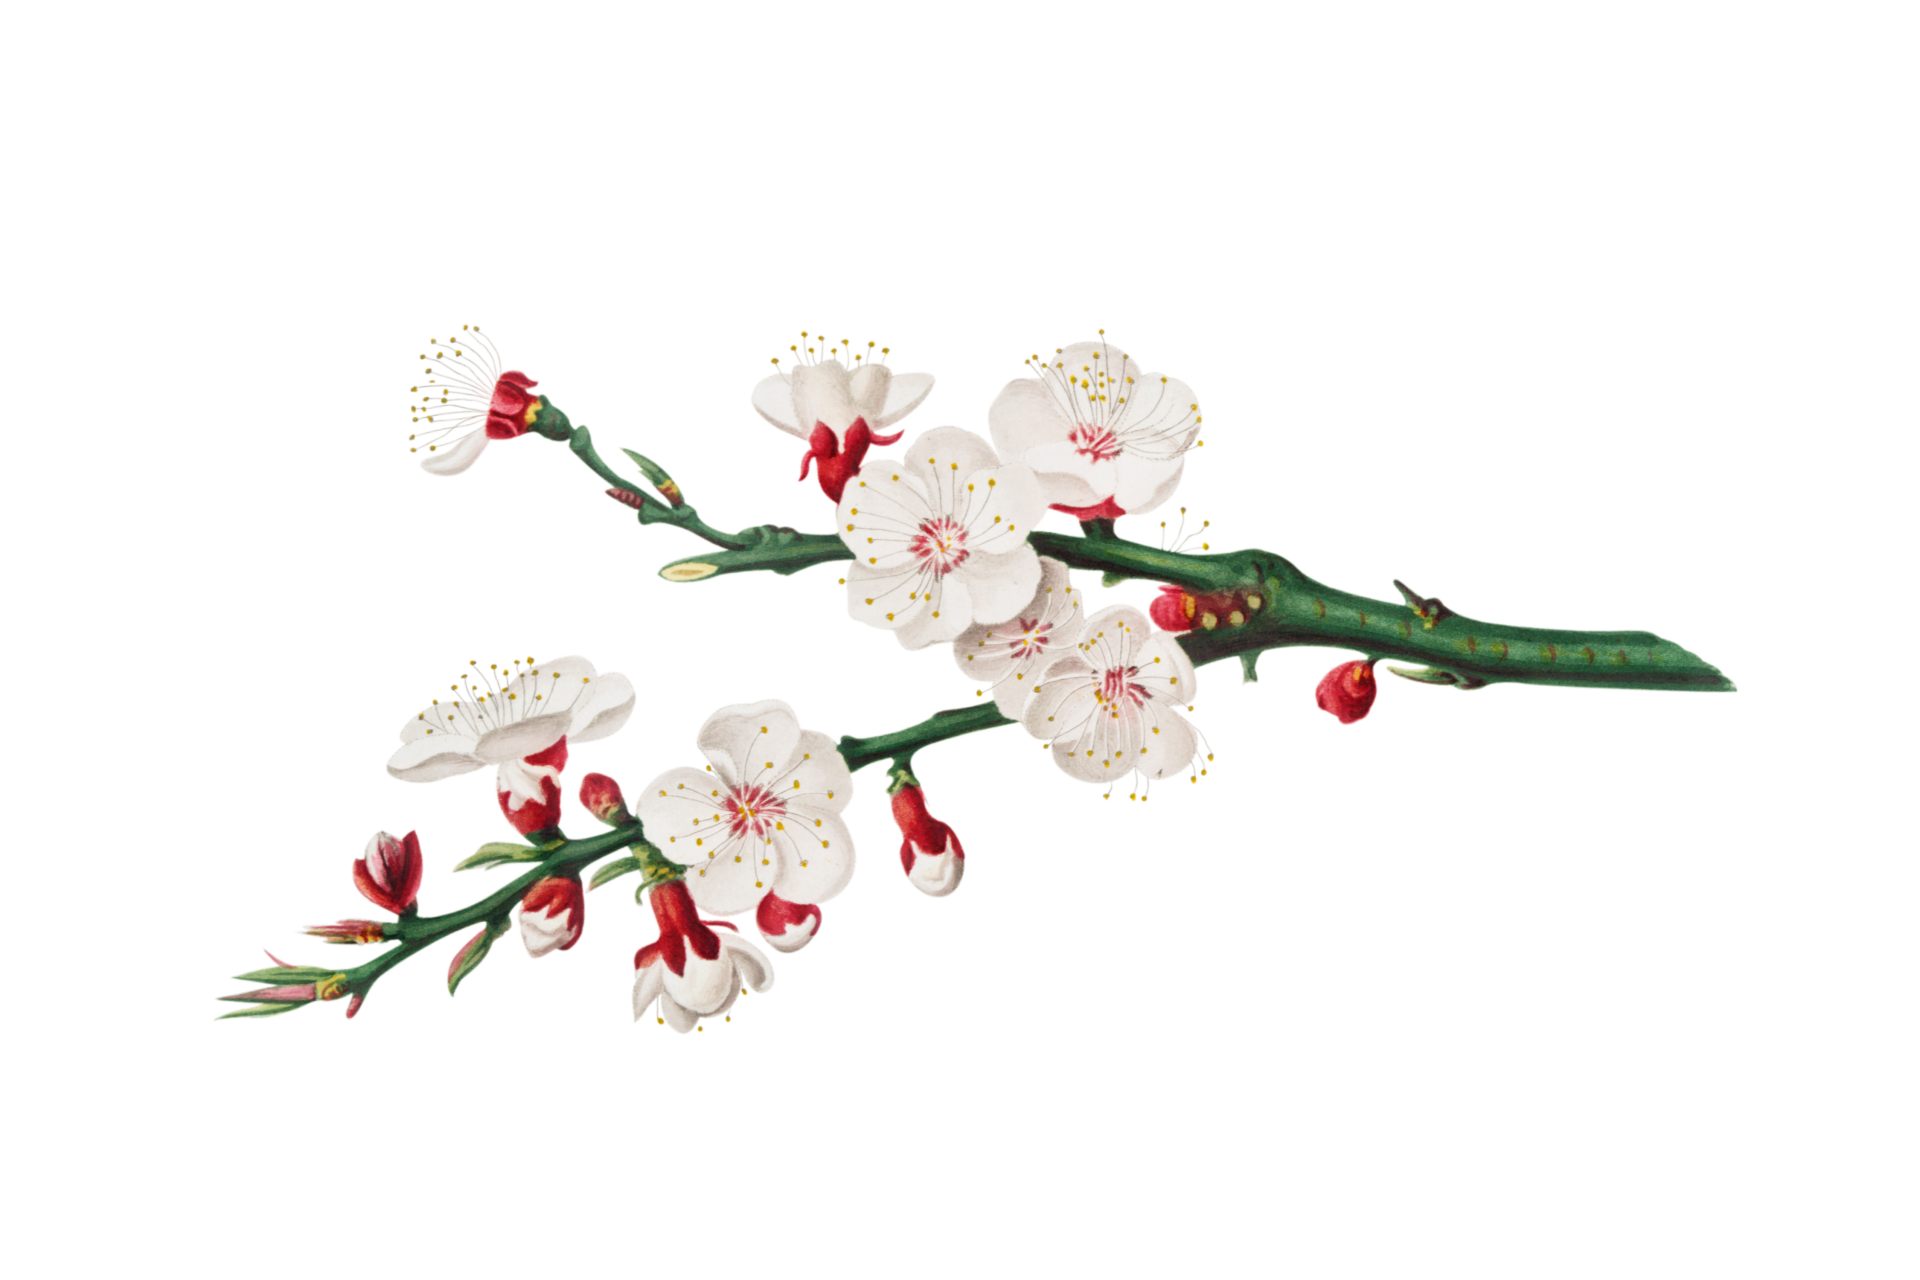 Cherry Blossom Branch Vintage Art